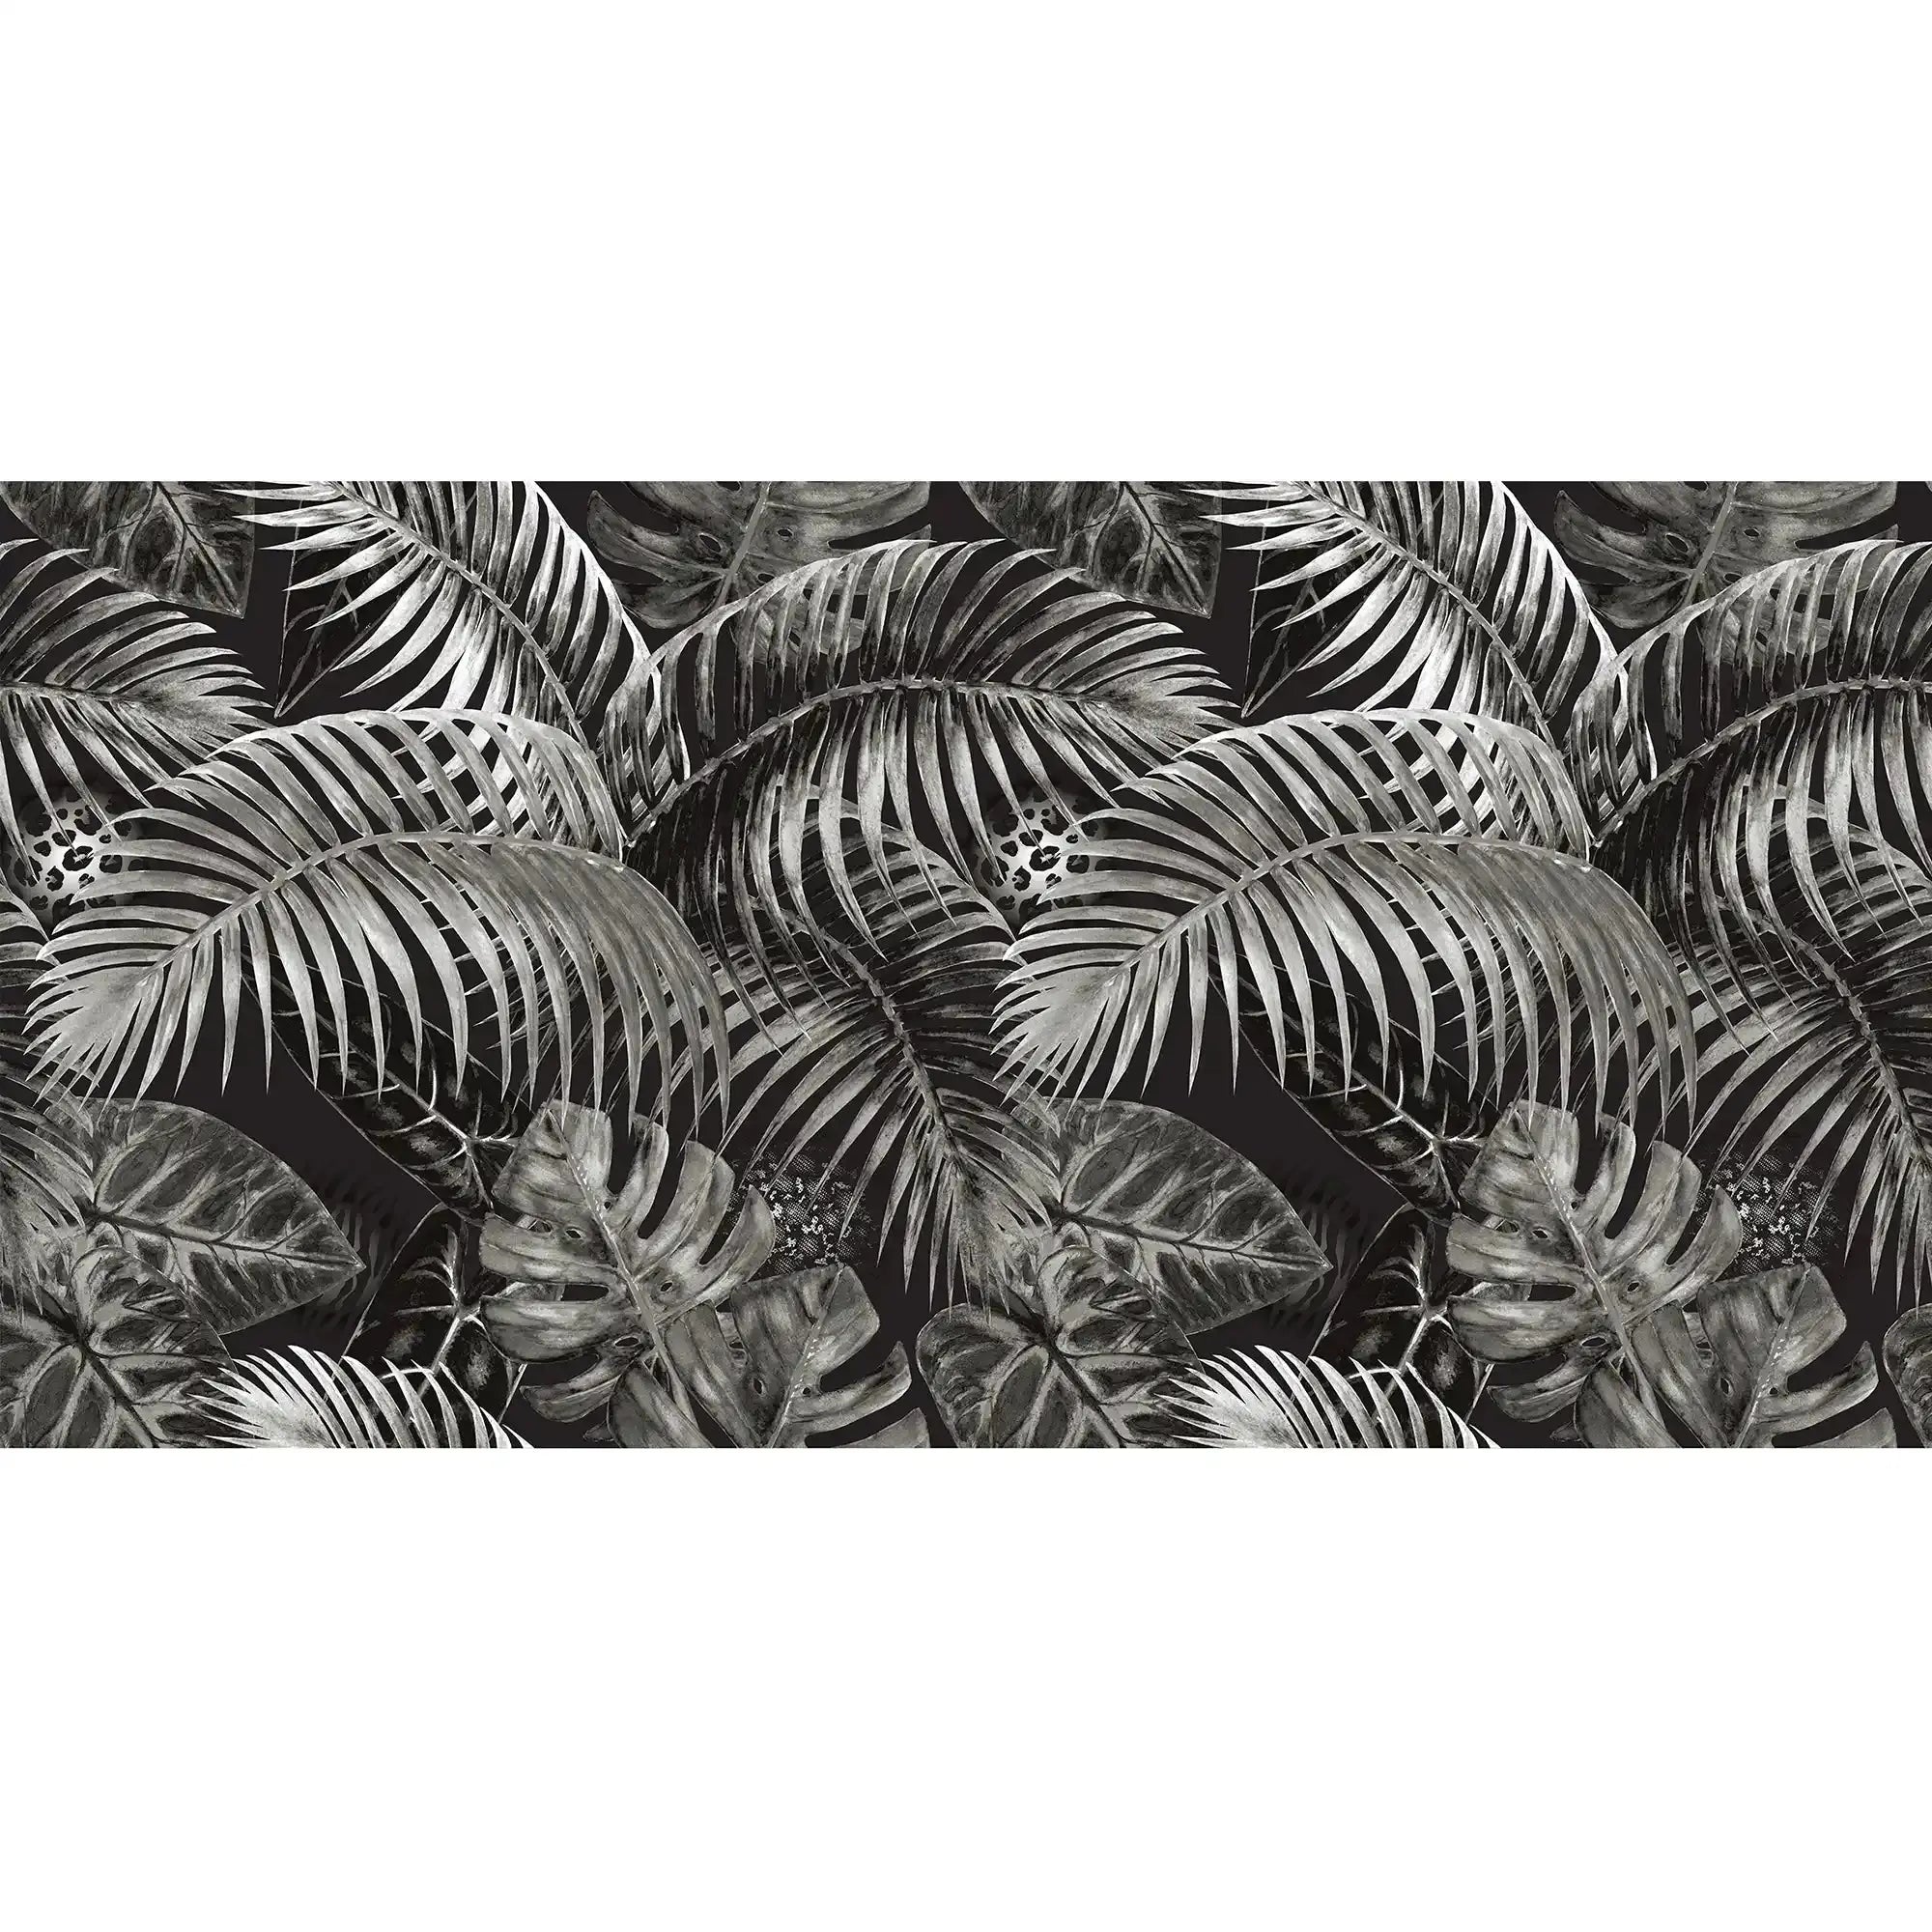 3096-E / Jungle Leaves Wallpaper - Tropical Botanical Wall Decor - Self Adhesive, Peel and Stick - Modern and Contemporary - Artevella